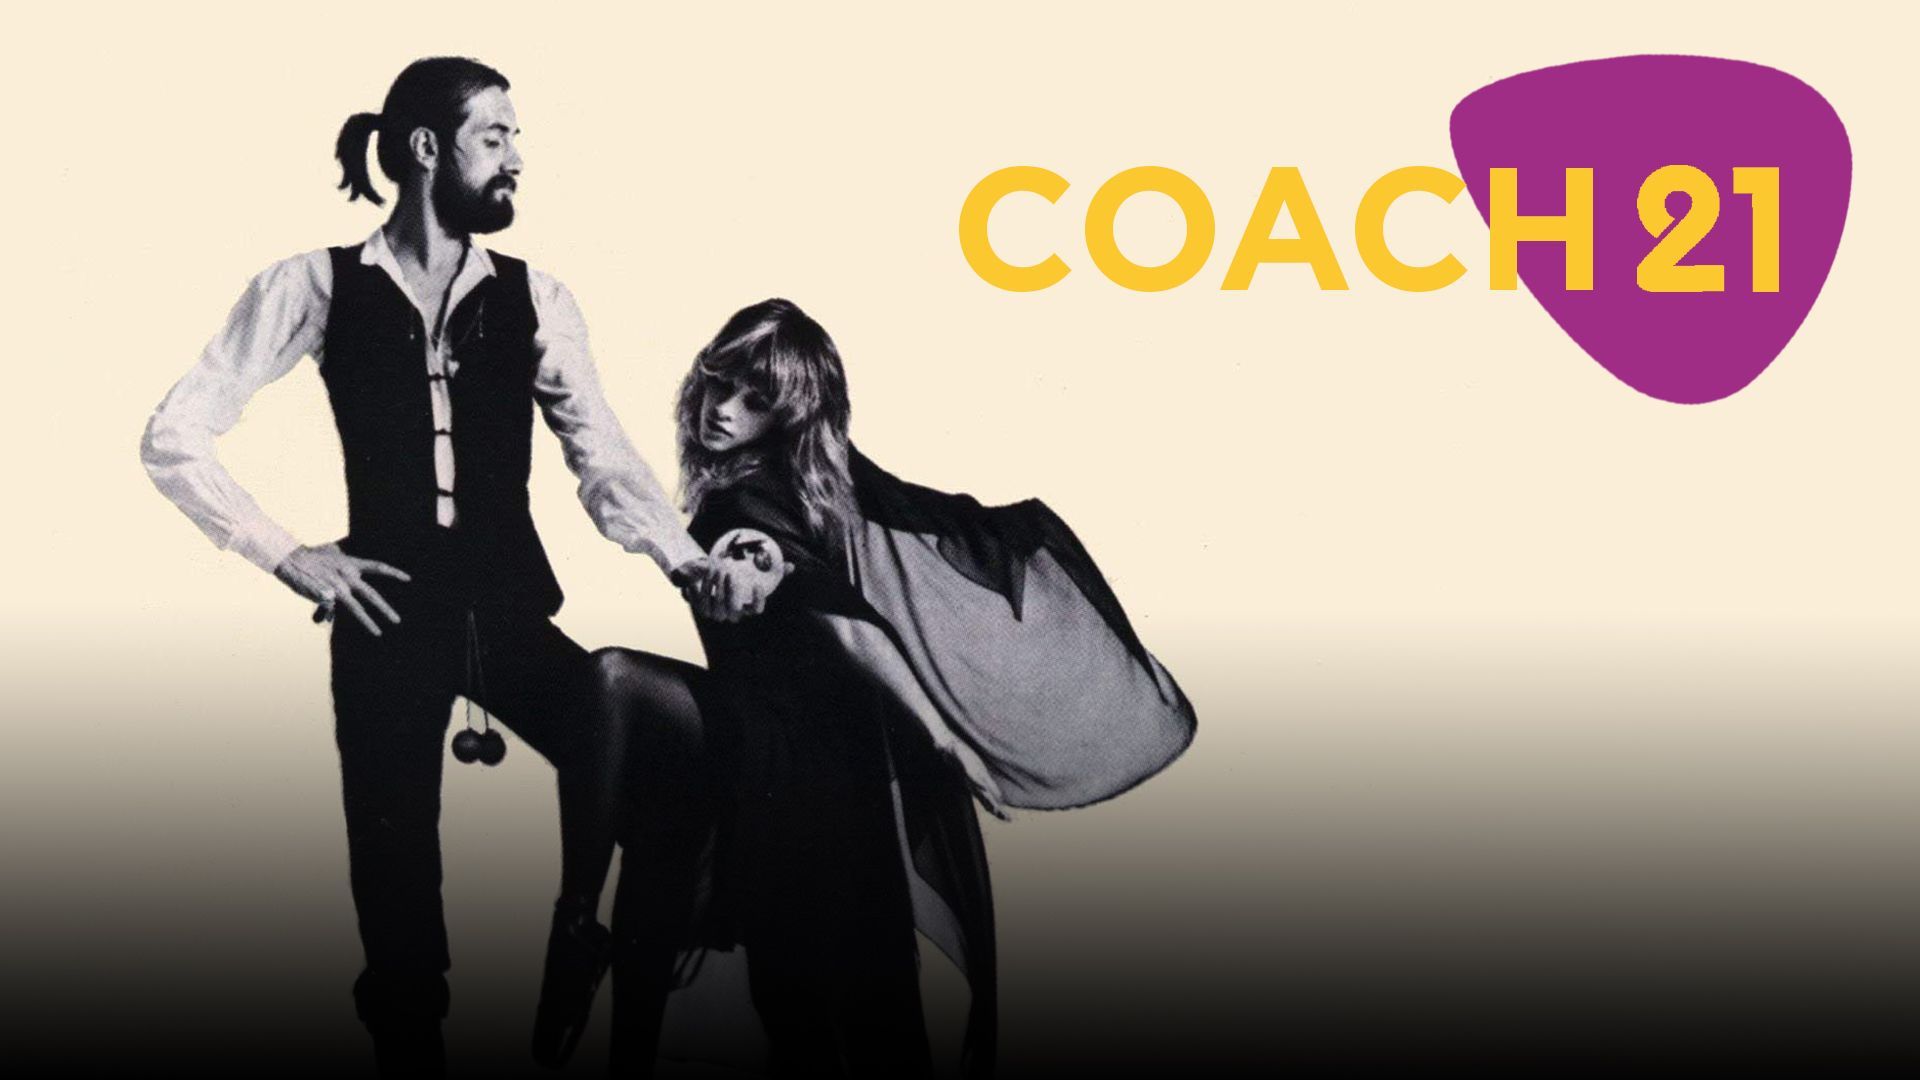 [Coach 21] Fleetwood Mac - The Chain